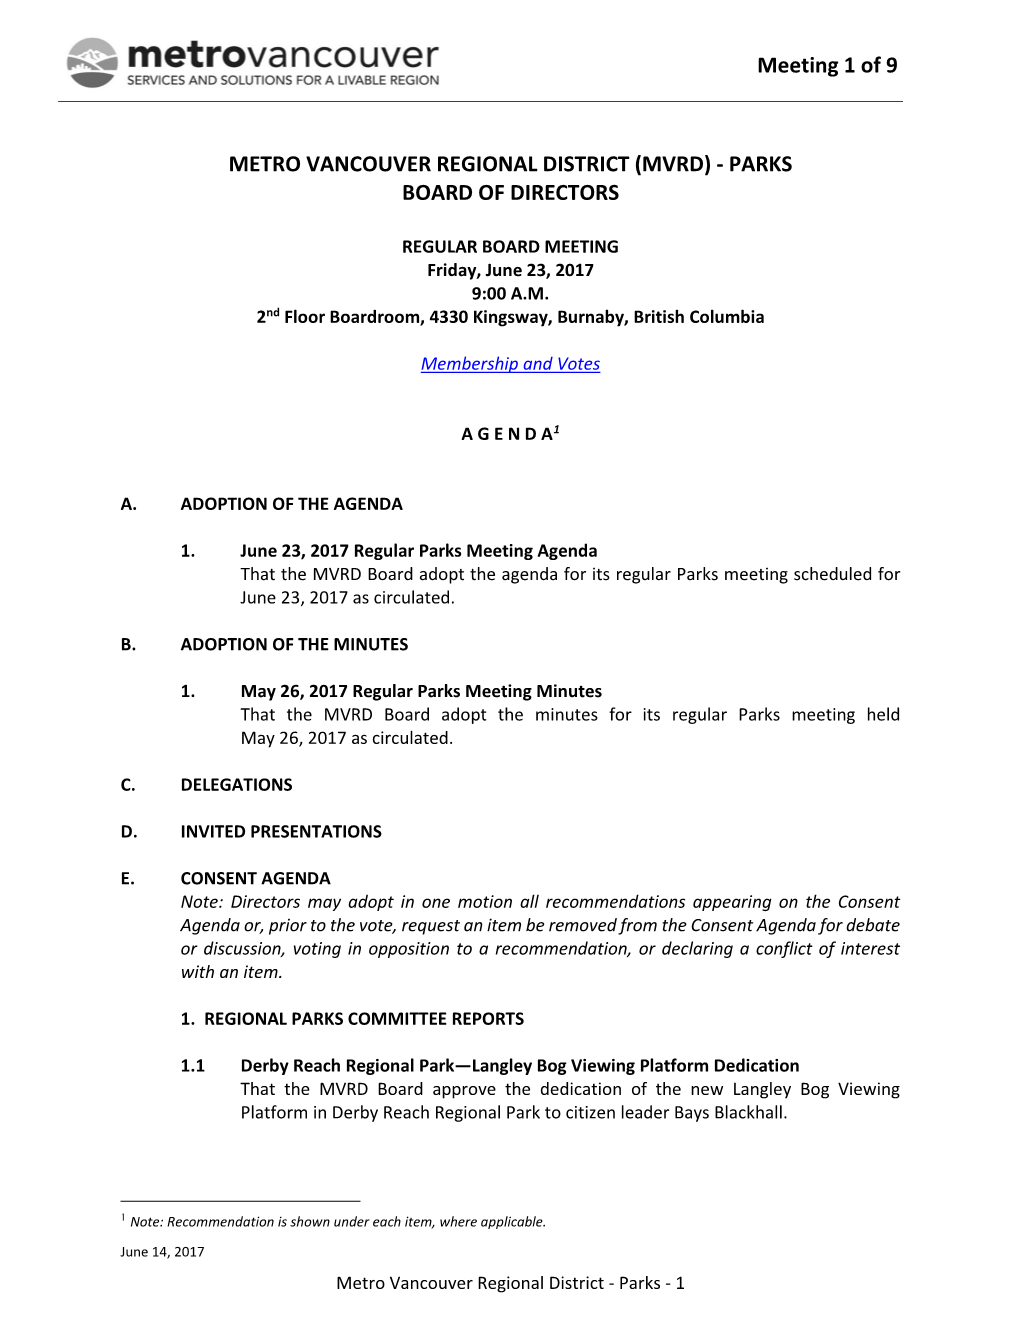 MVRD Parks Board Meeting Agenda